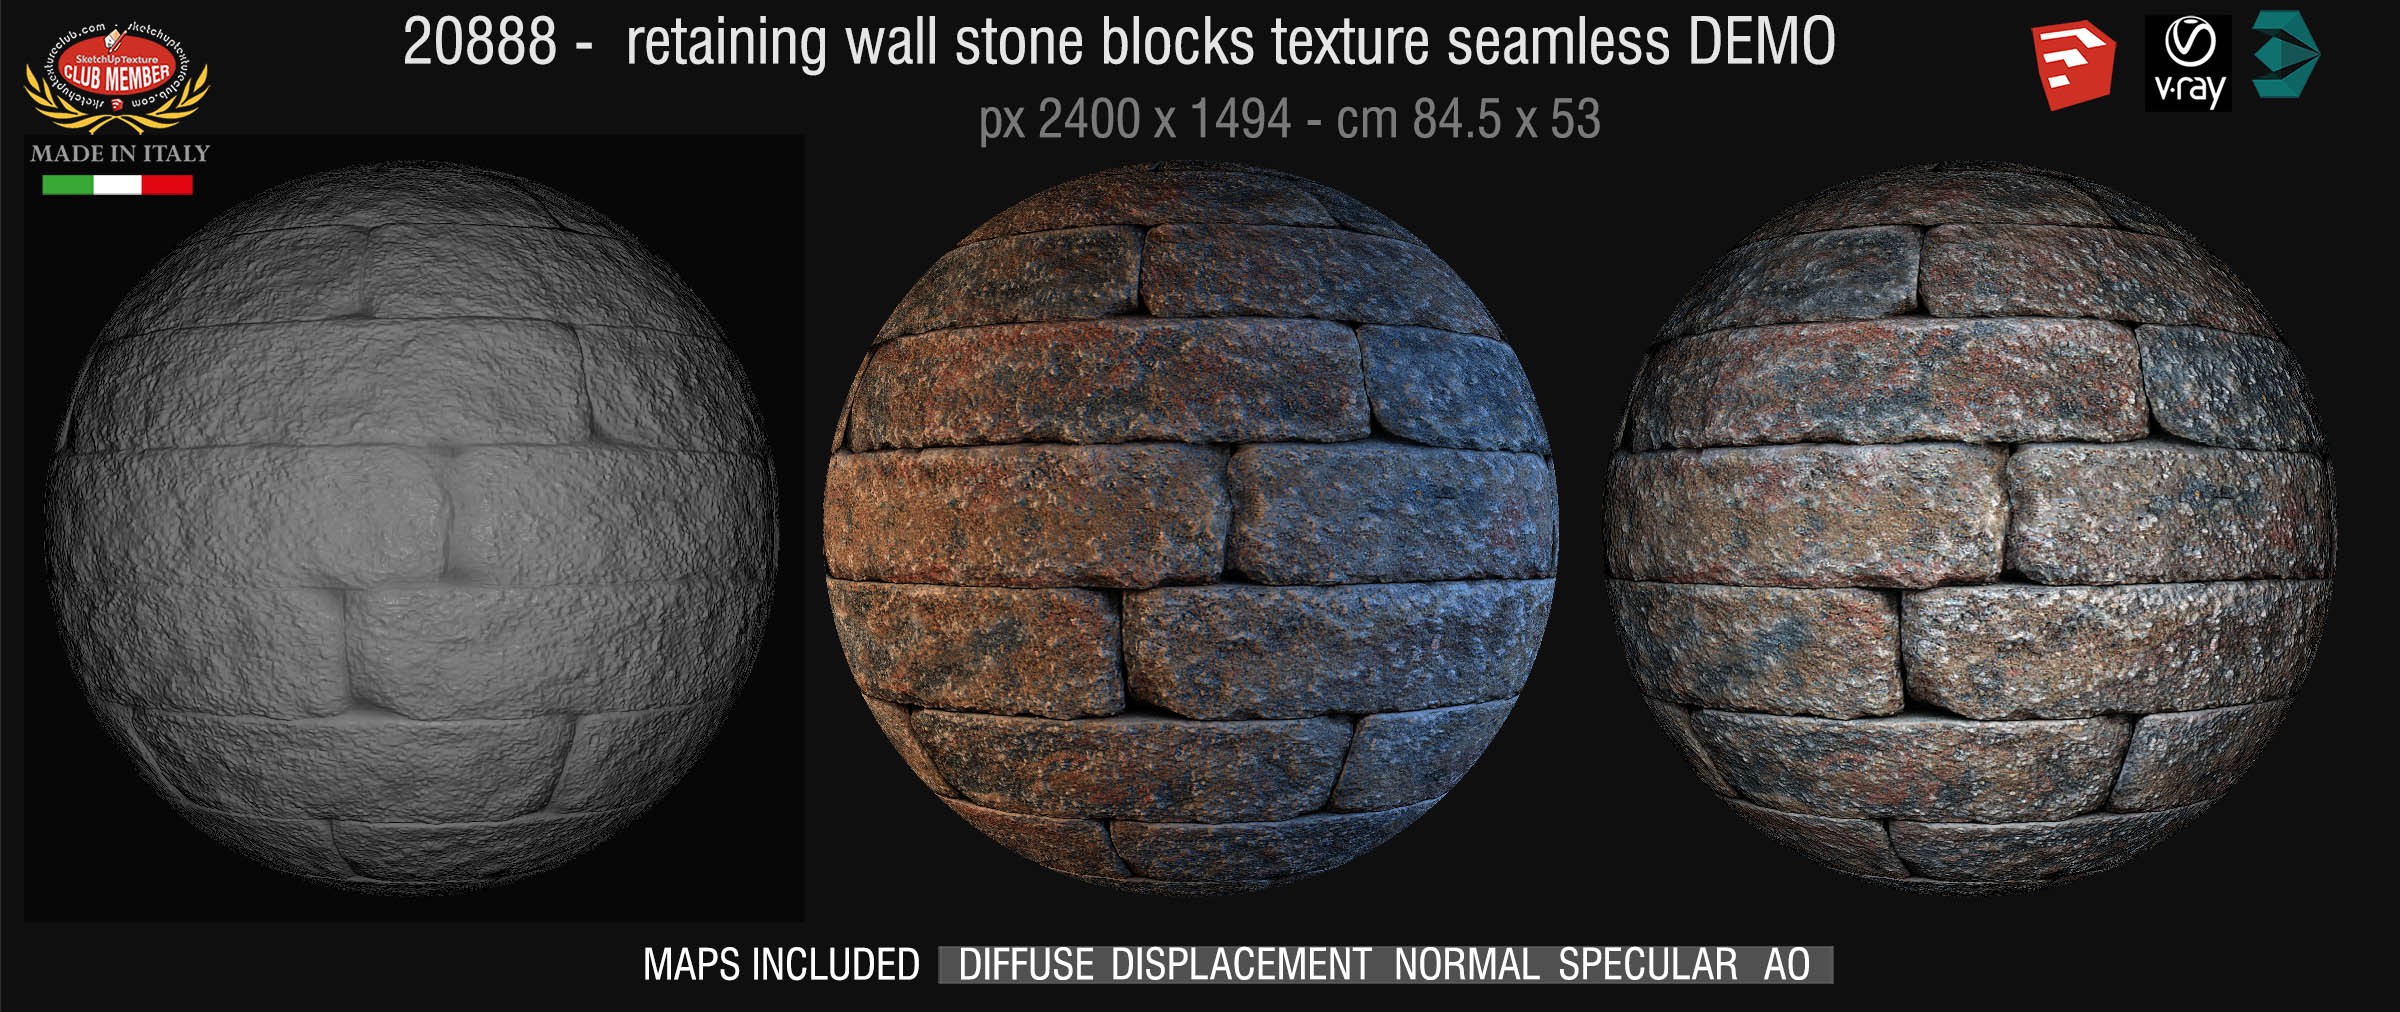 20888 HR Retaining wall stone blocks texture DEMO